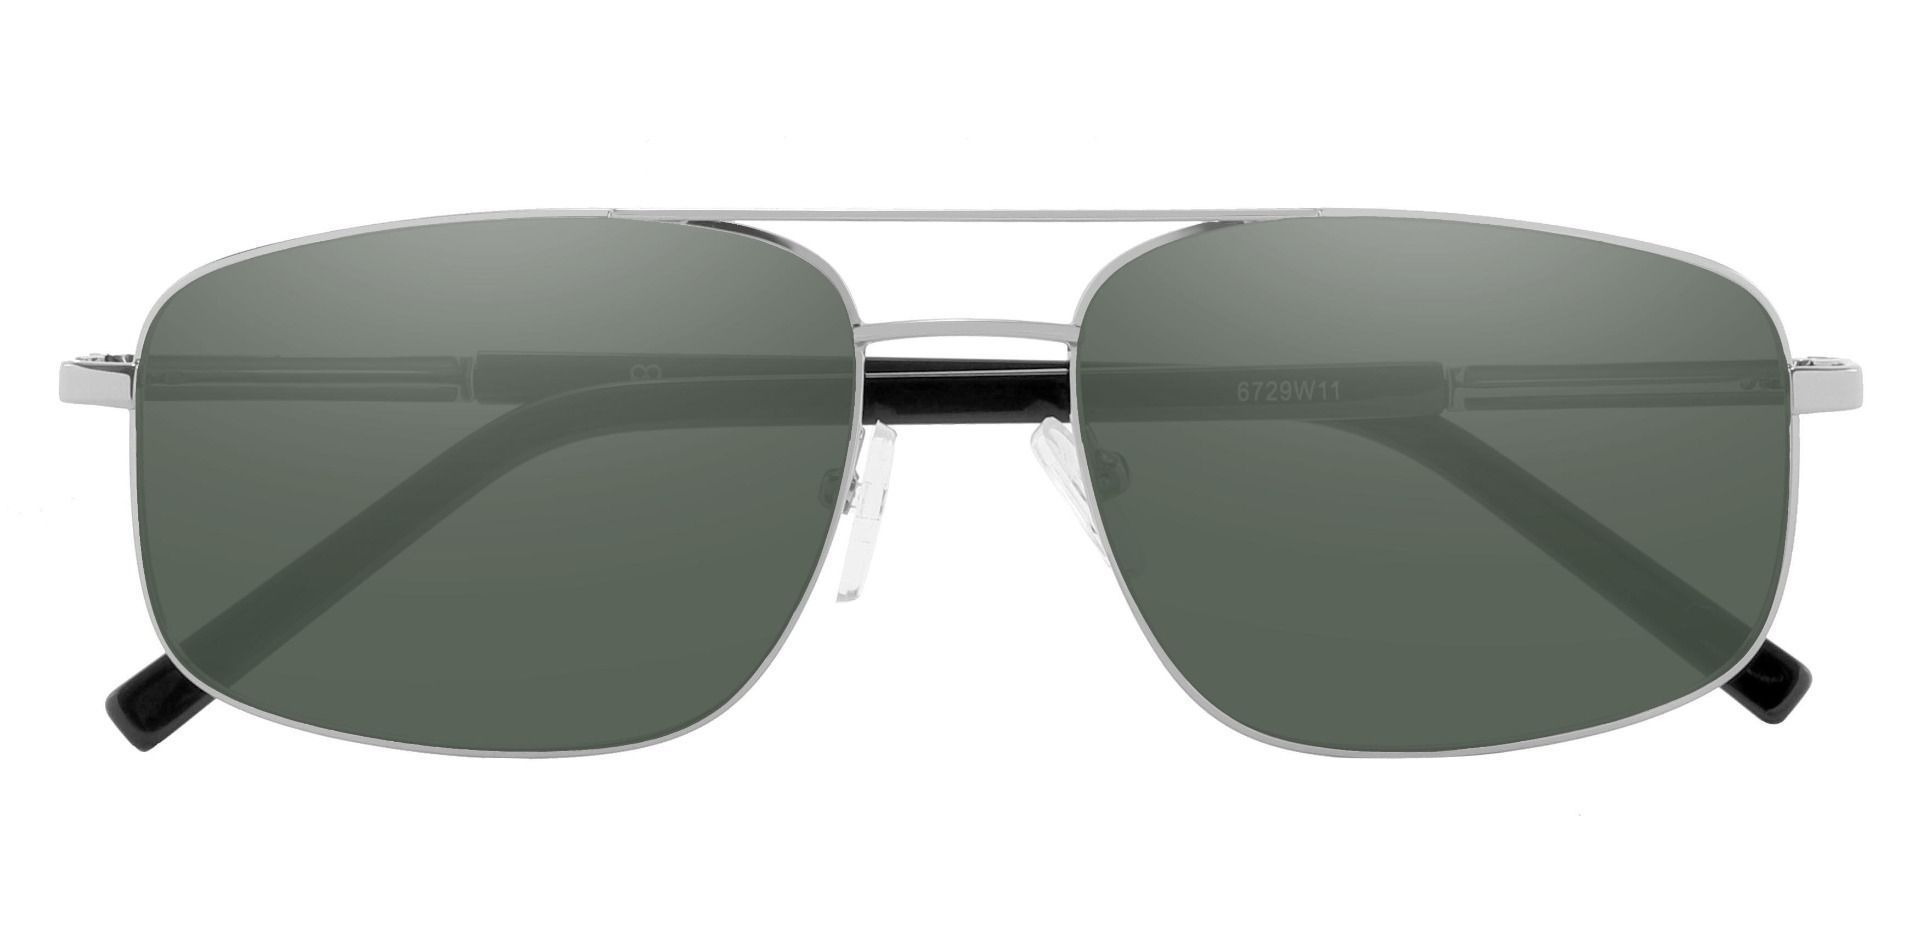 Davenport Aviator Lined Bifocal Sunglasses - Silver Frame With Green Lenses